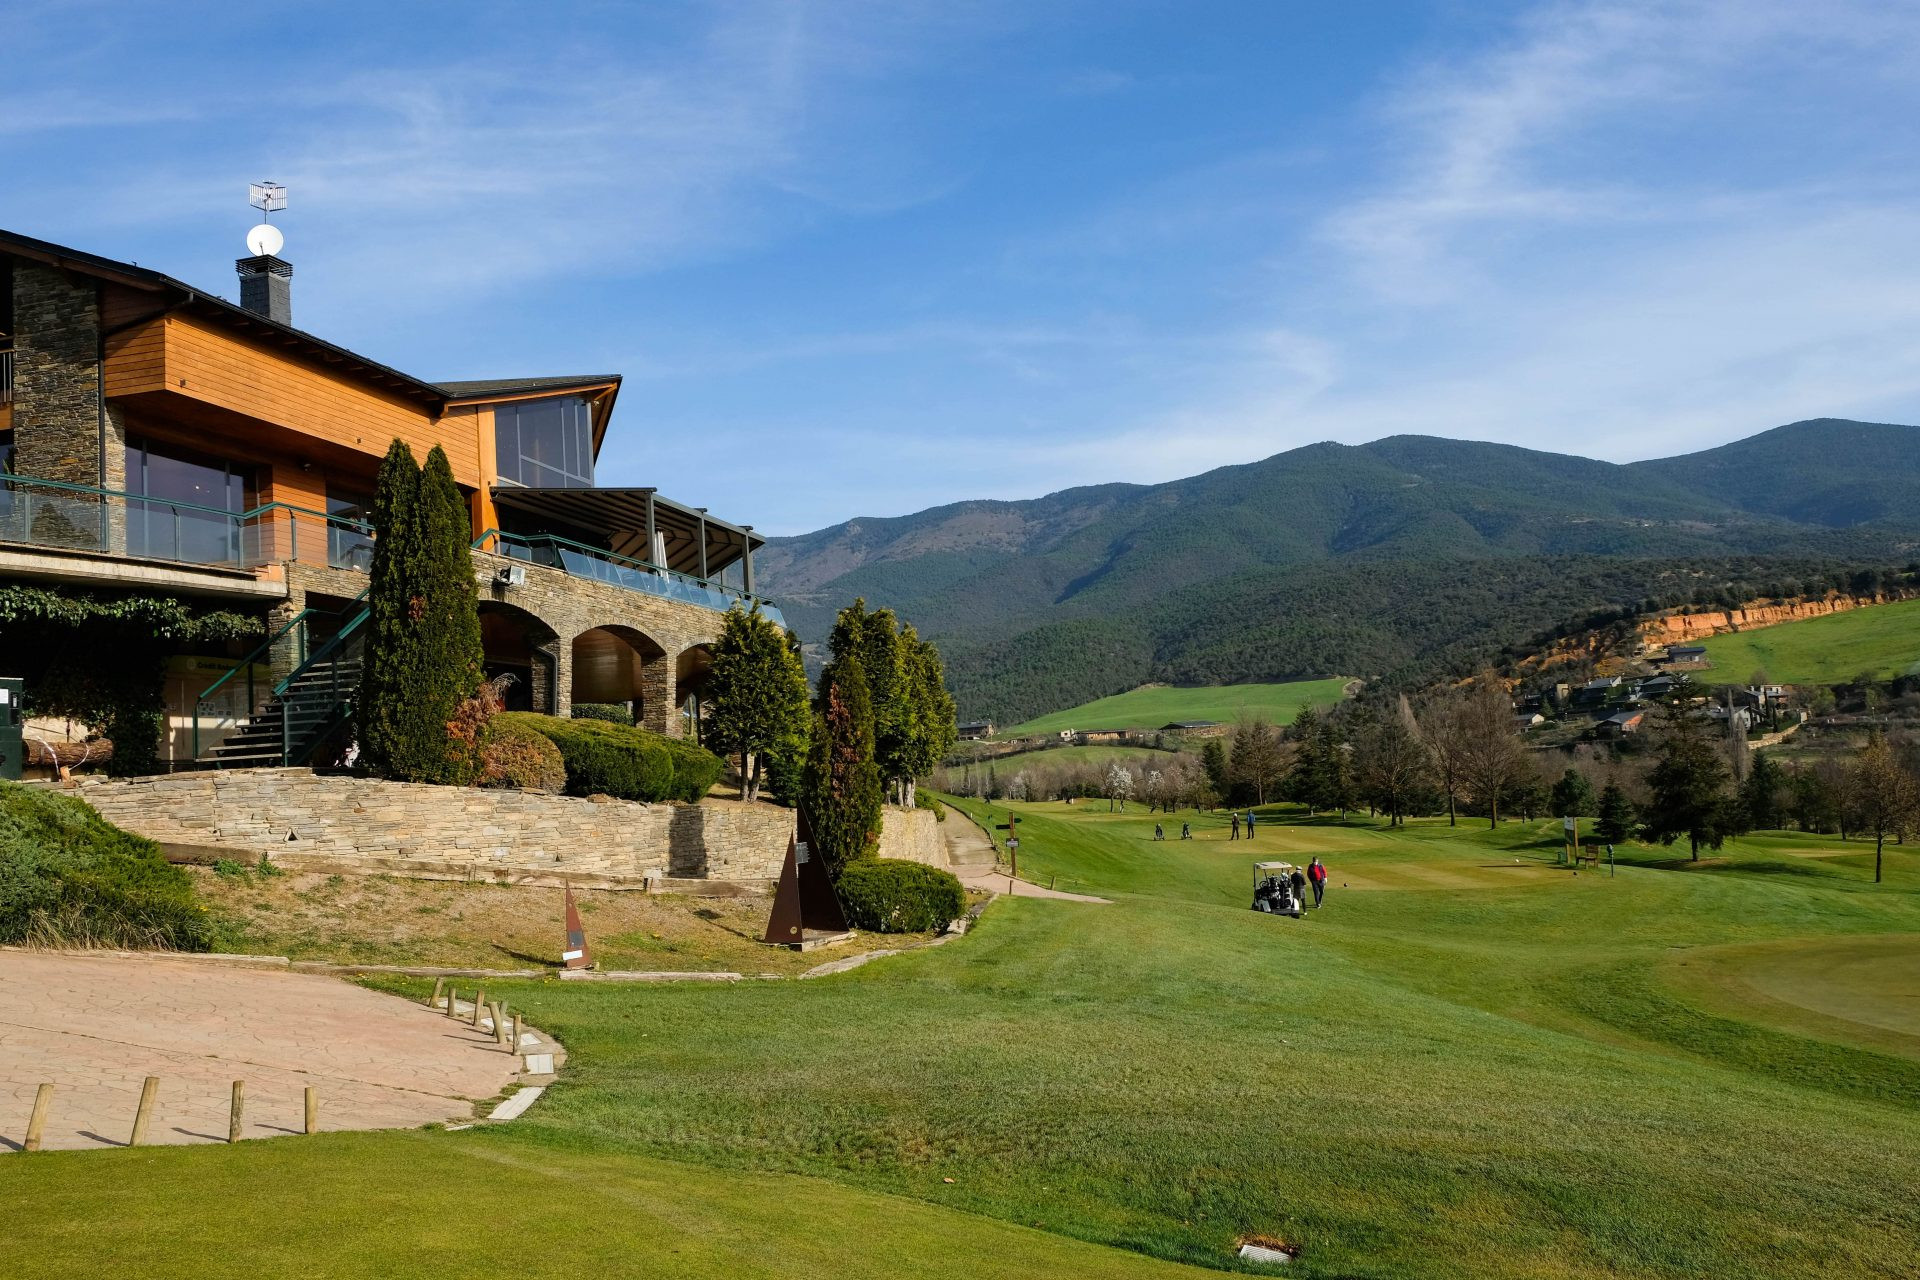 Aravell Golf acogerá un torneo del Alps Tour en junio próximo